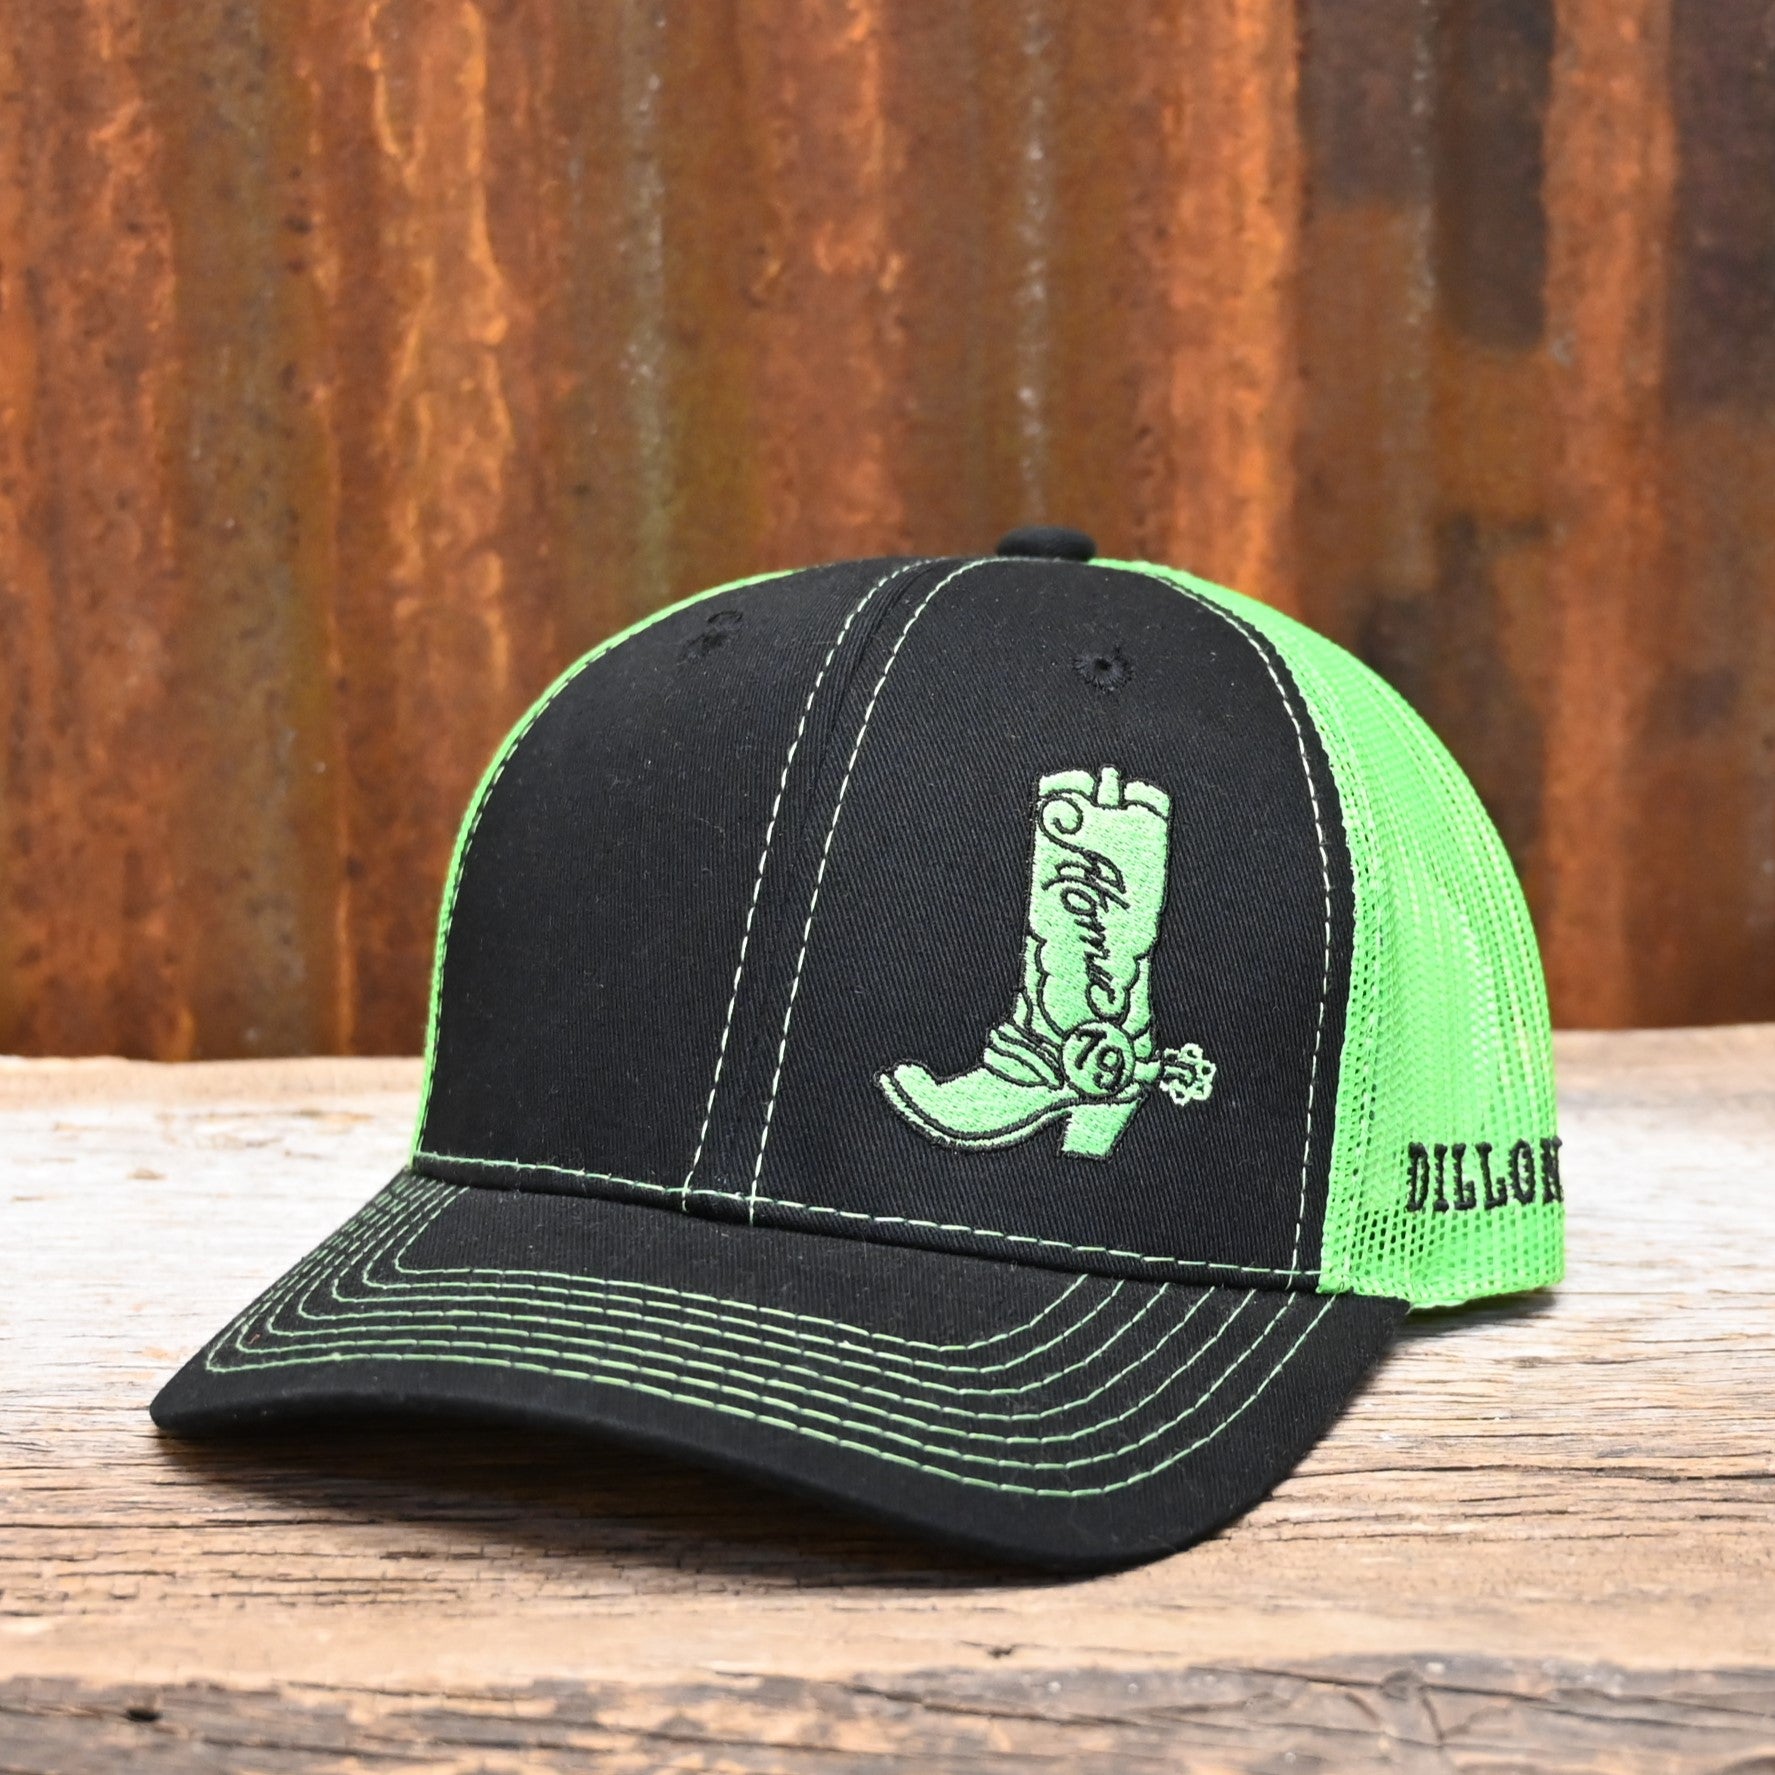 Atomic 79 Boot Black Shoot/Neon Green Mesh Cap Standard Size view of hat